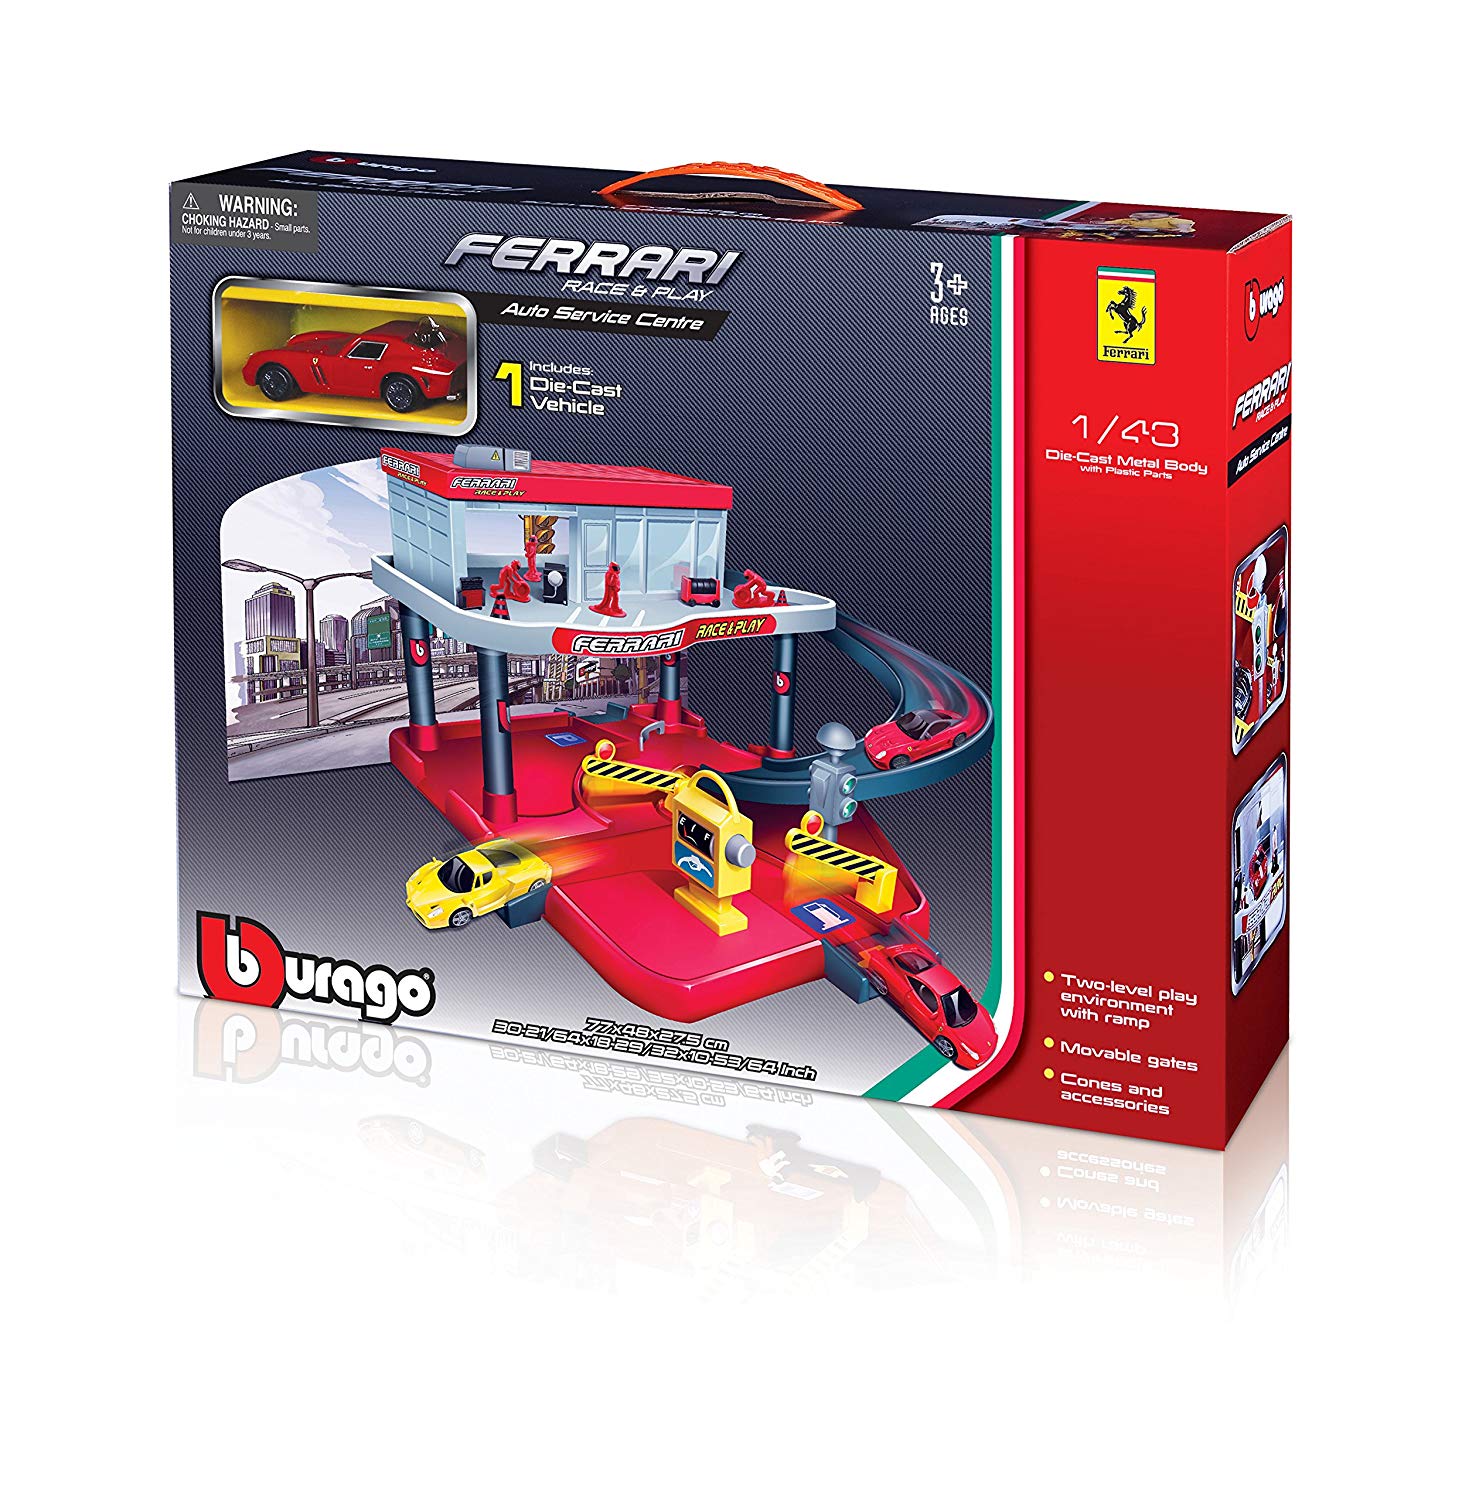 Bburago - Ferrari Race & Play Auto Service Centre with 1 Car